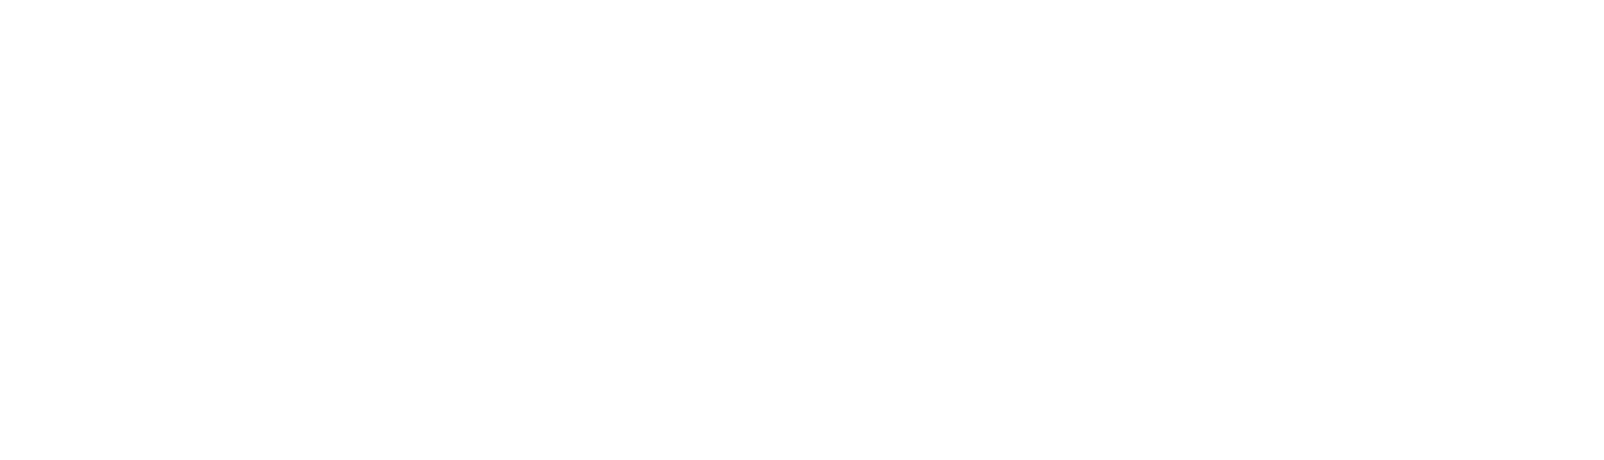 Marvell Technology Group logo large for dark backgrounds (transparent PNG)